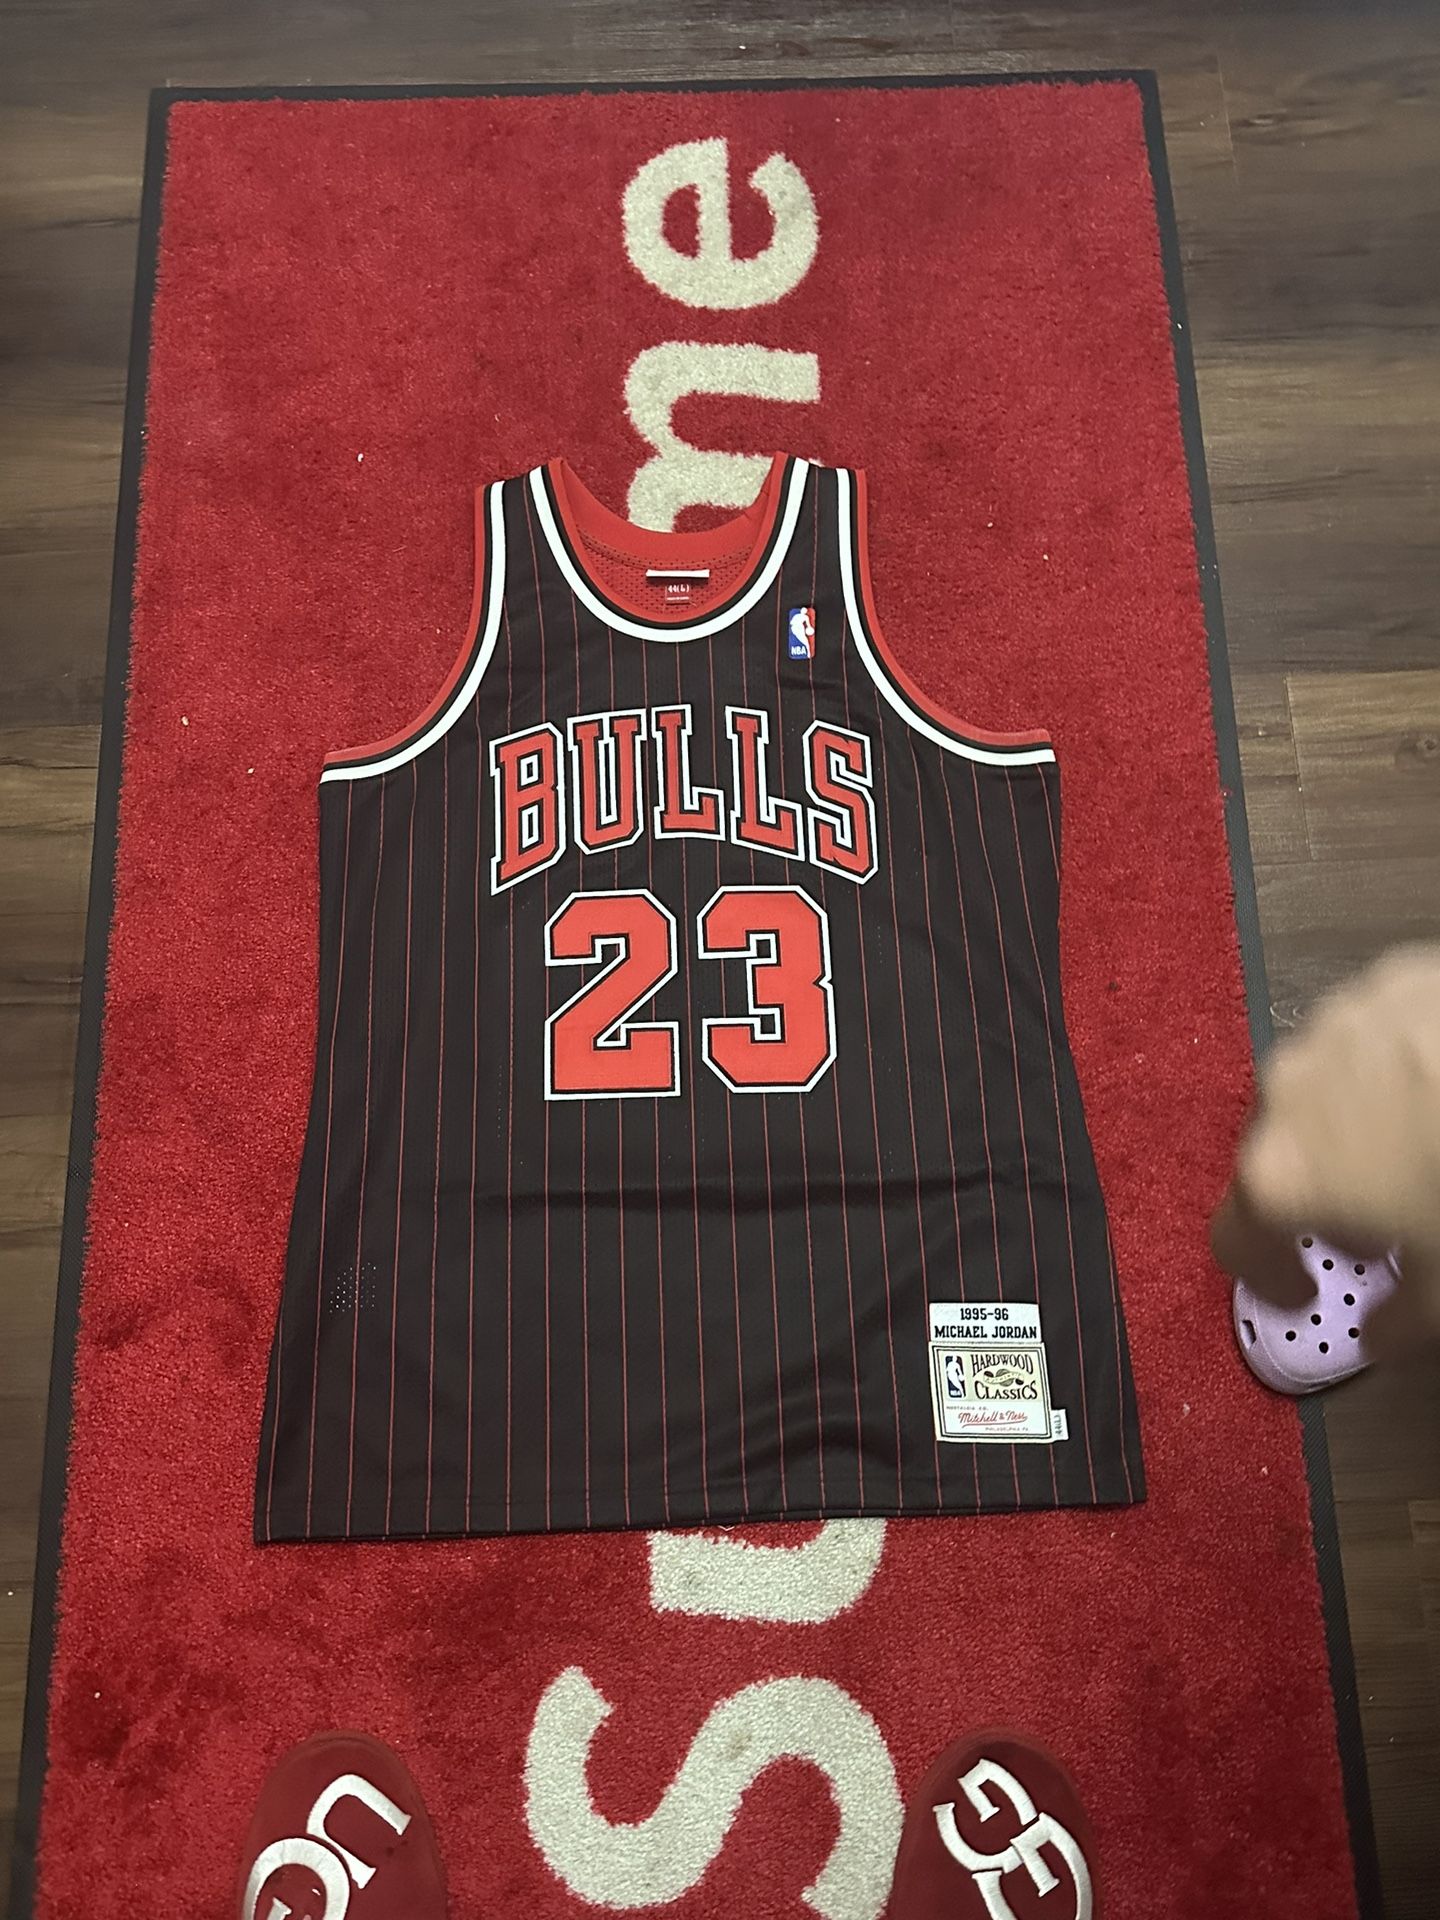 Authentic Mitchell & Ness Chicago Bulls 1995-96 Michael Jordan Jersey